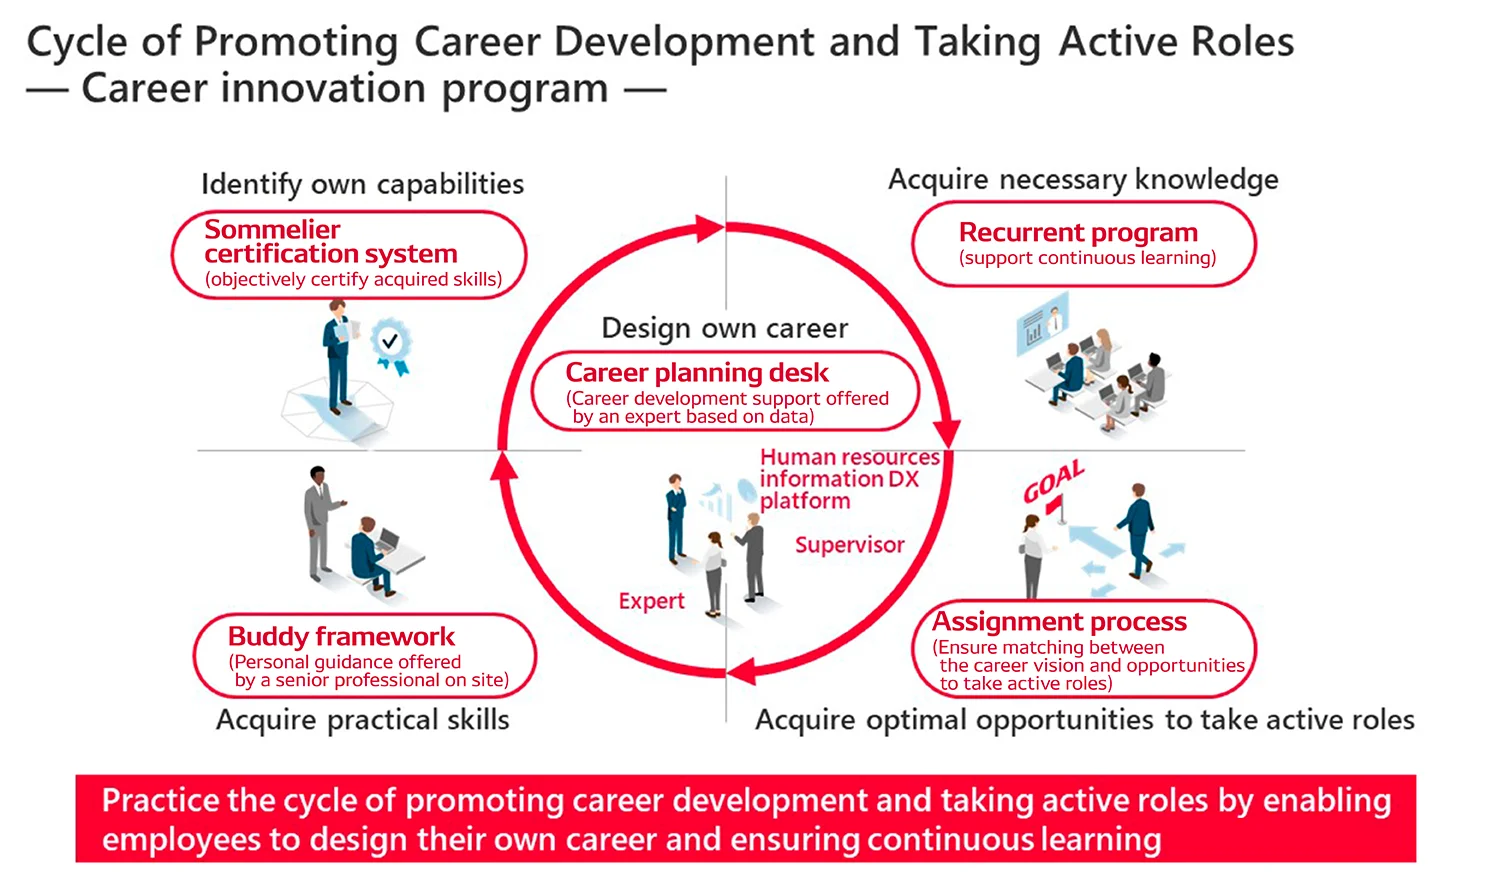 Outline of the Career Innovation Program (CIP)